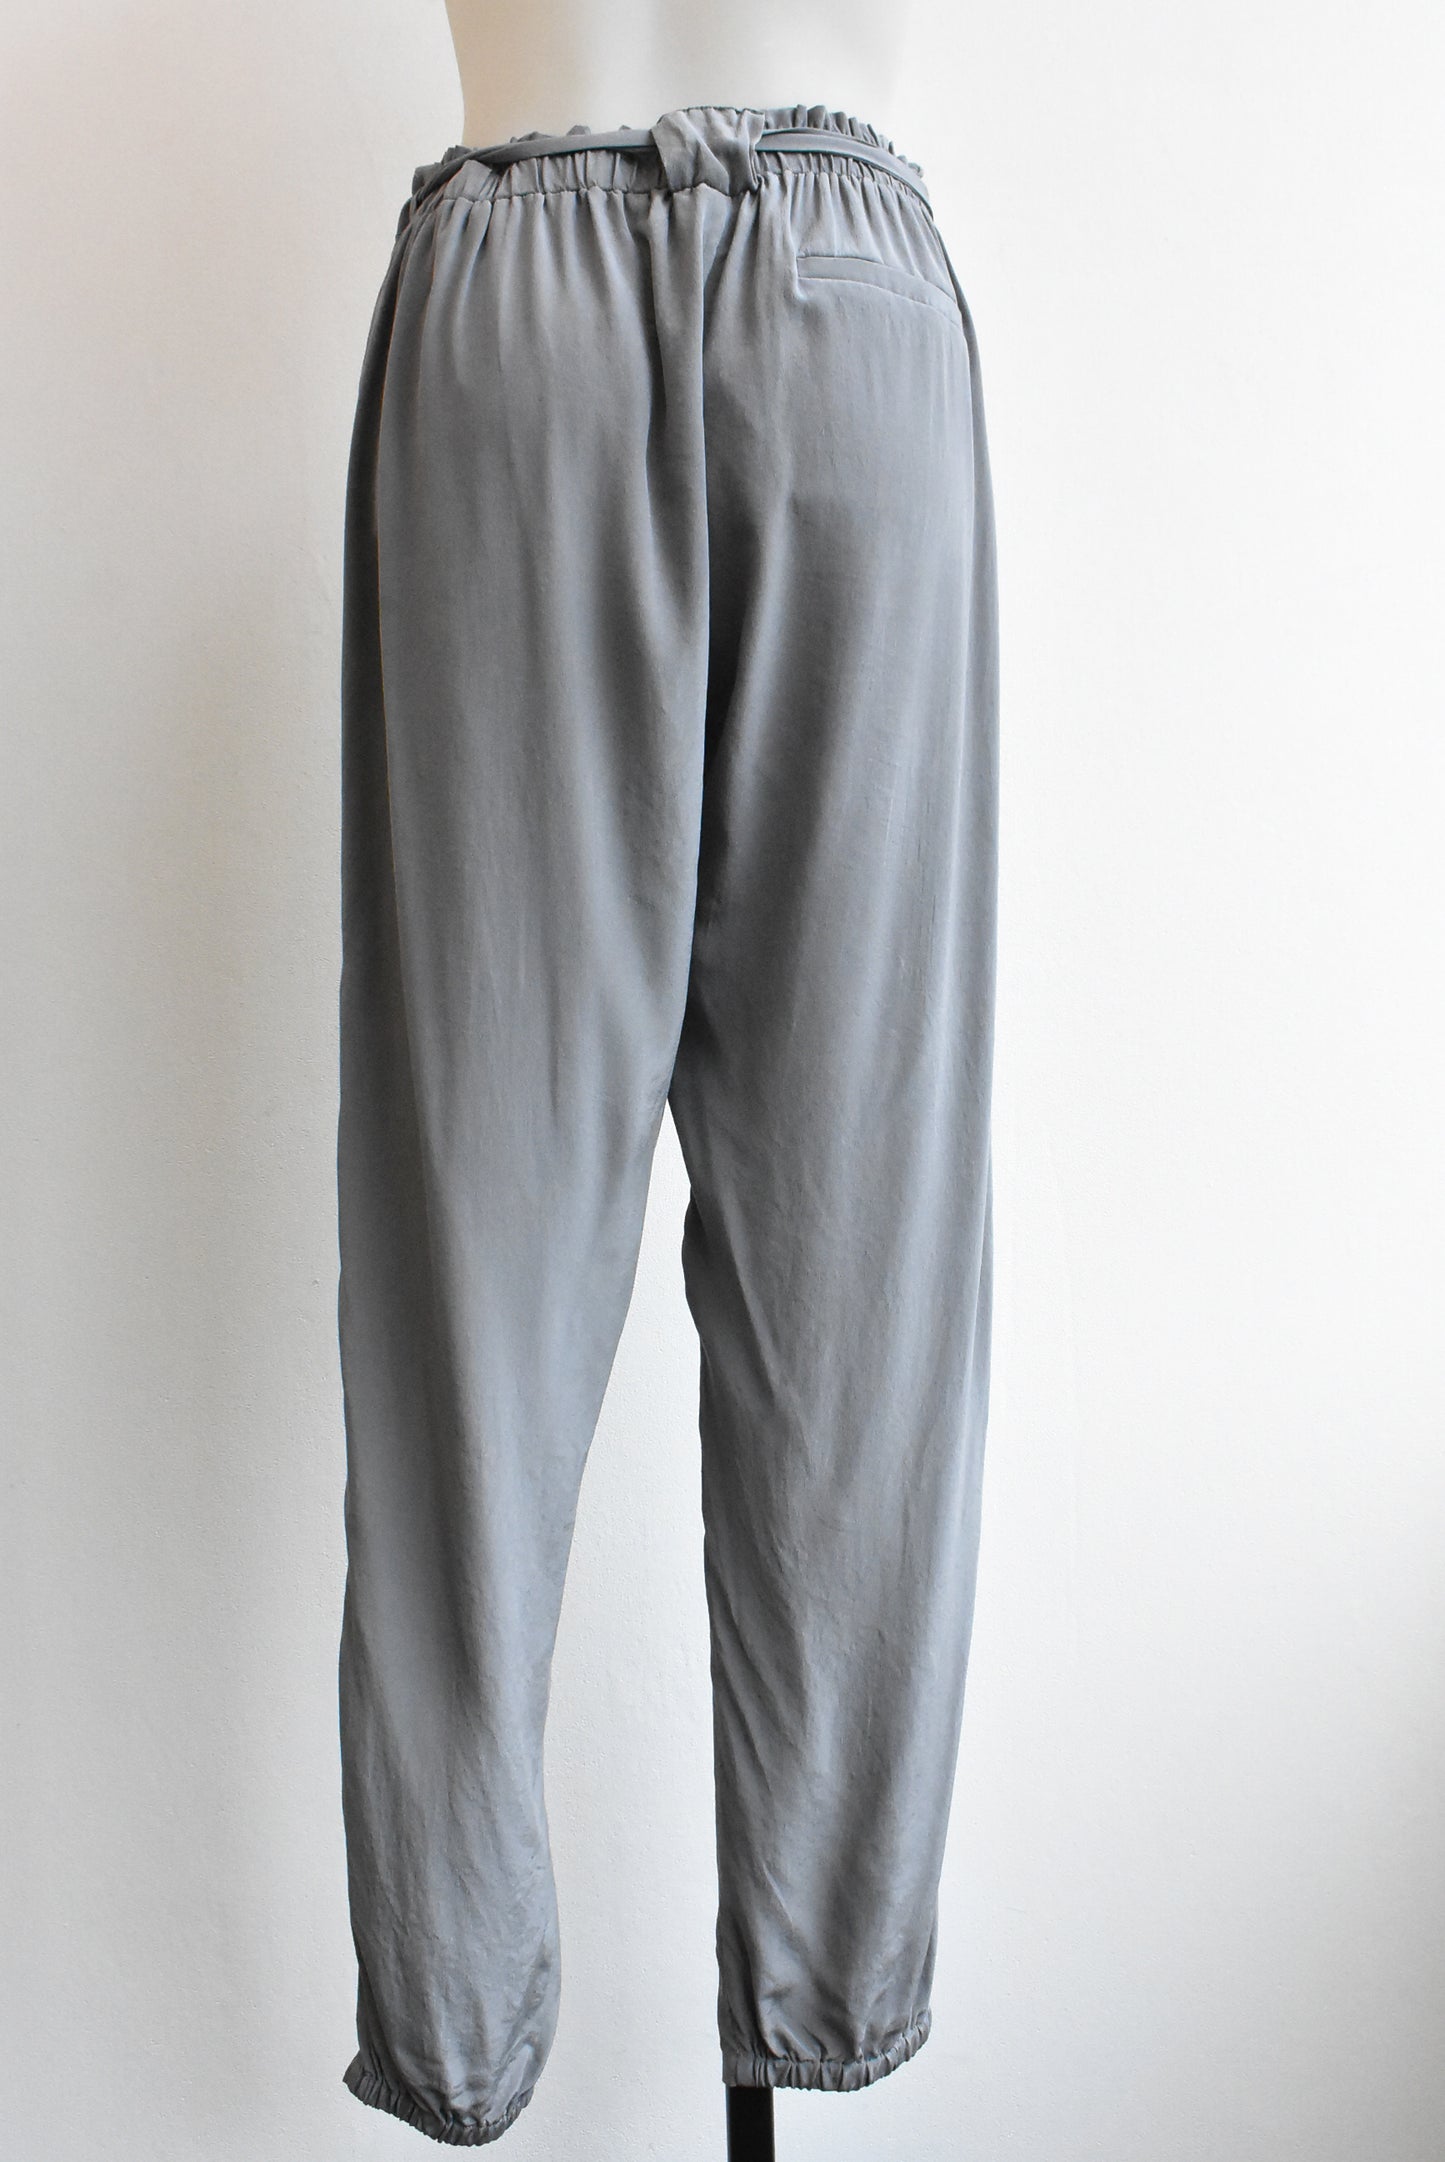 Max grey 100% silk pants, size 10